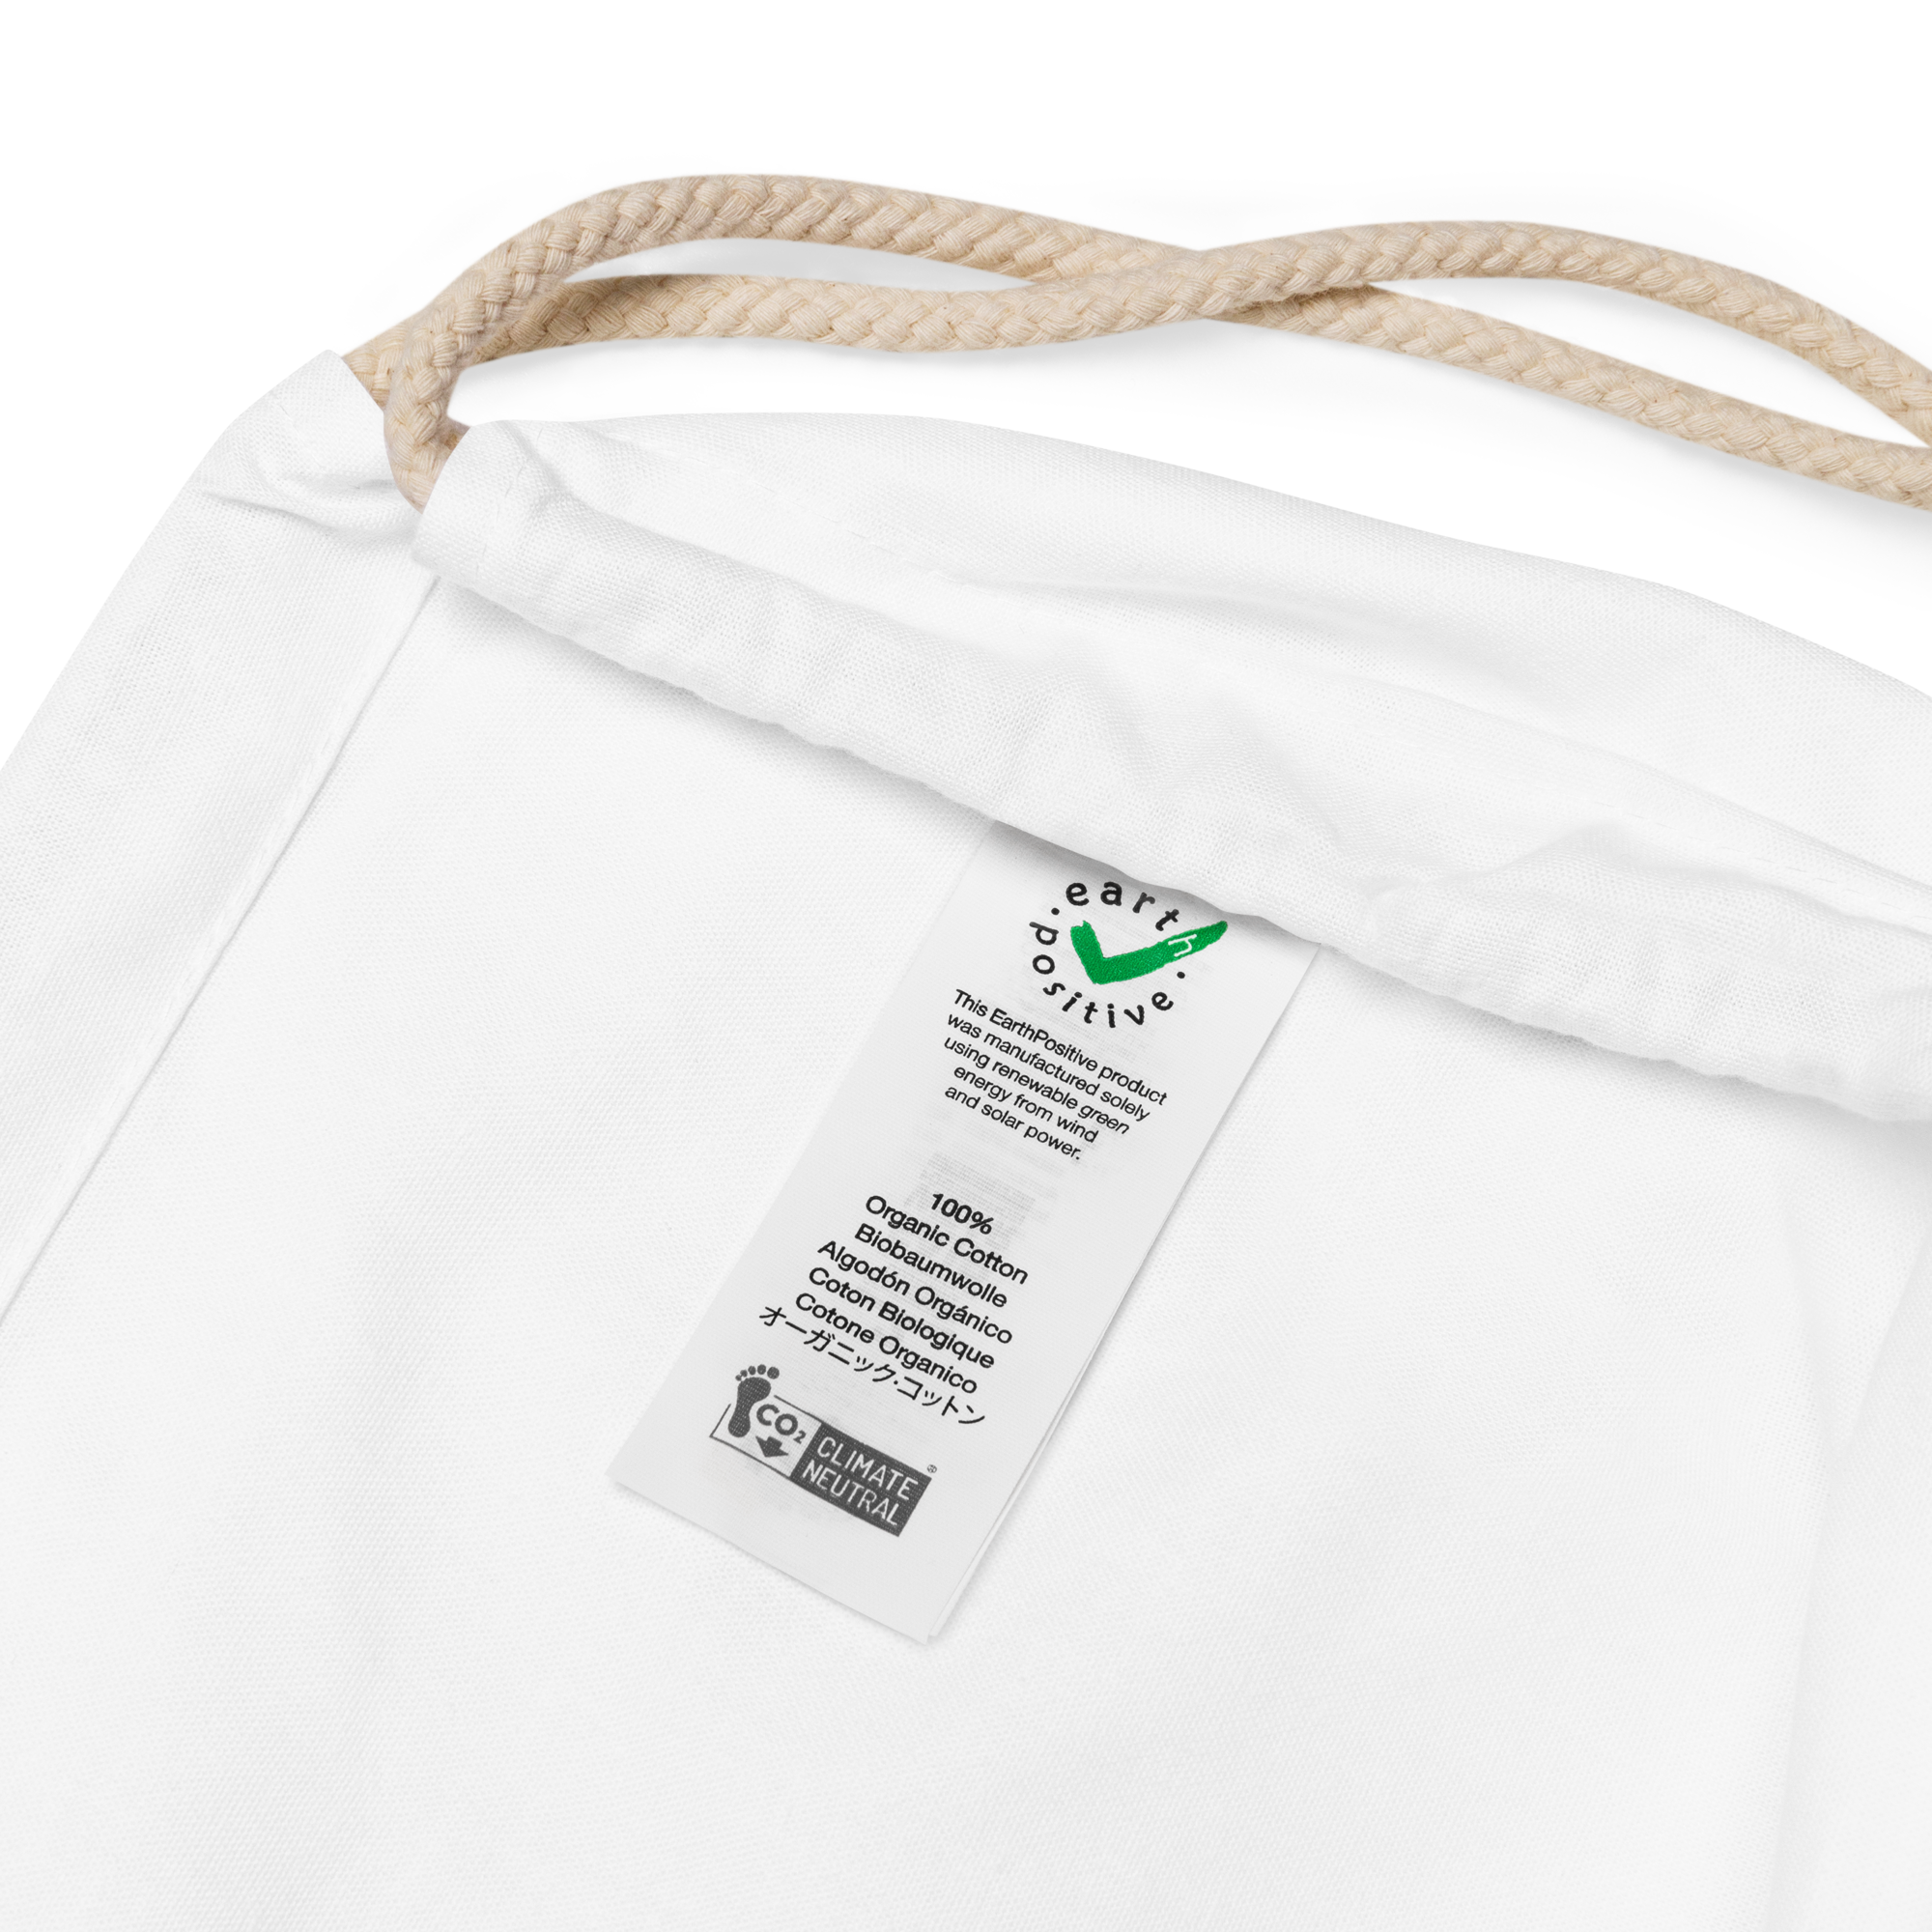 TSM Organic Cotton Drawstring Bag